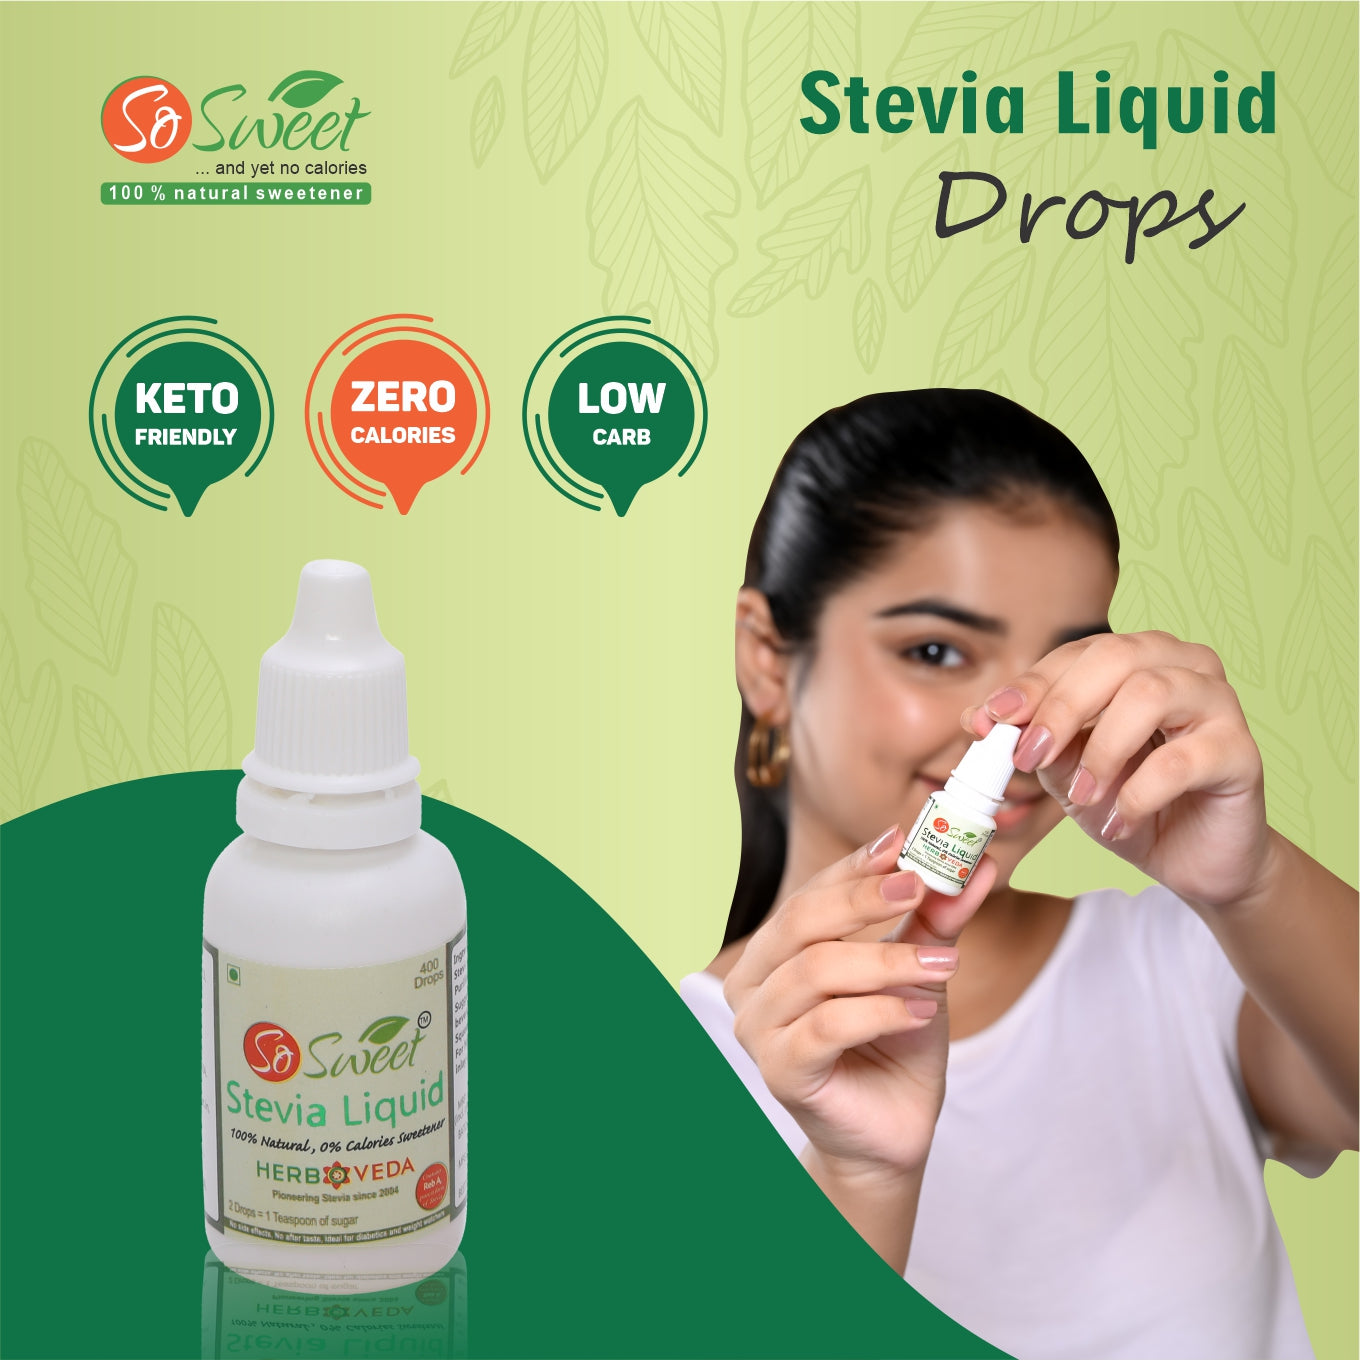 So sweet Stevia Liquid Sugar Free Natural Zero Calorie Sweetener (Pack of 5, 2000 Drops - 400 Drops Each)